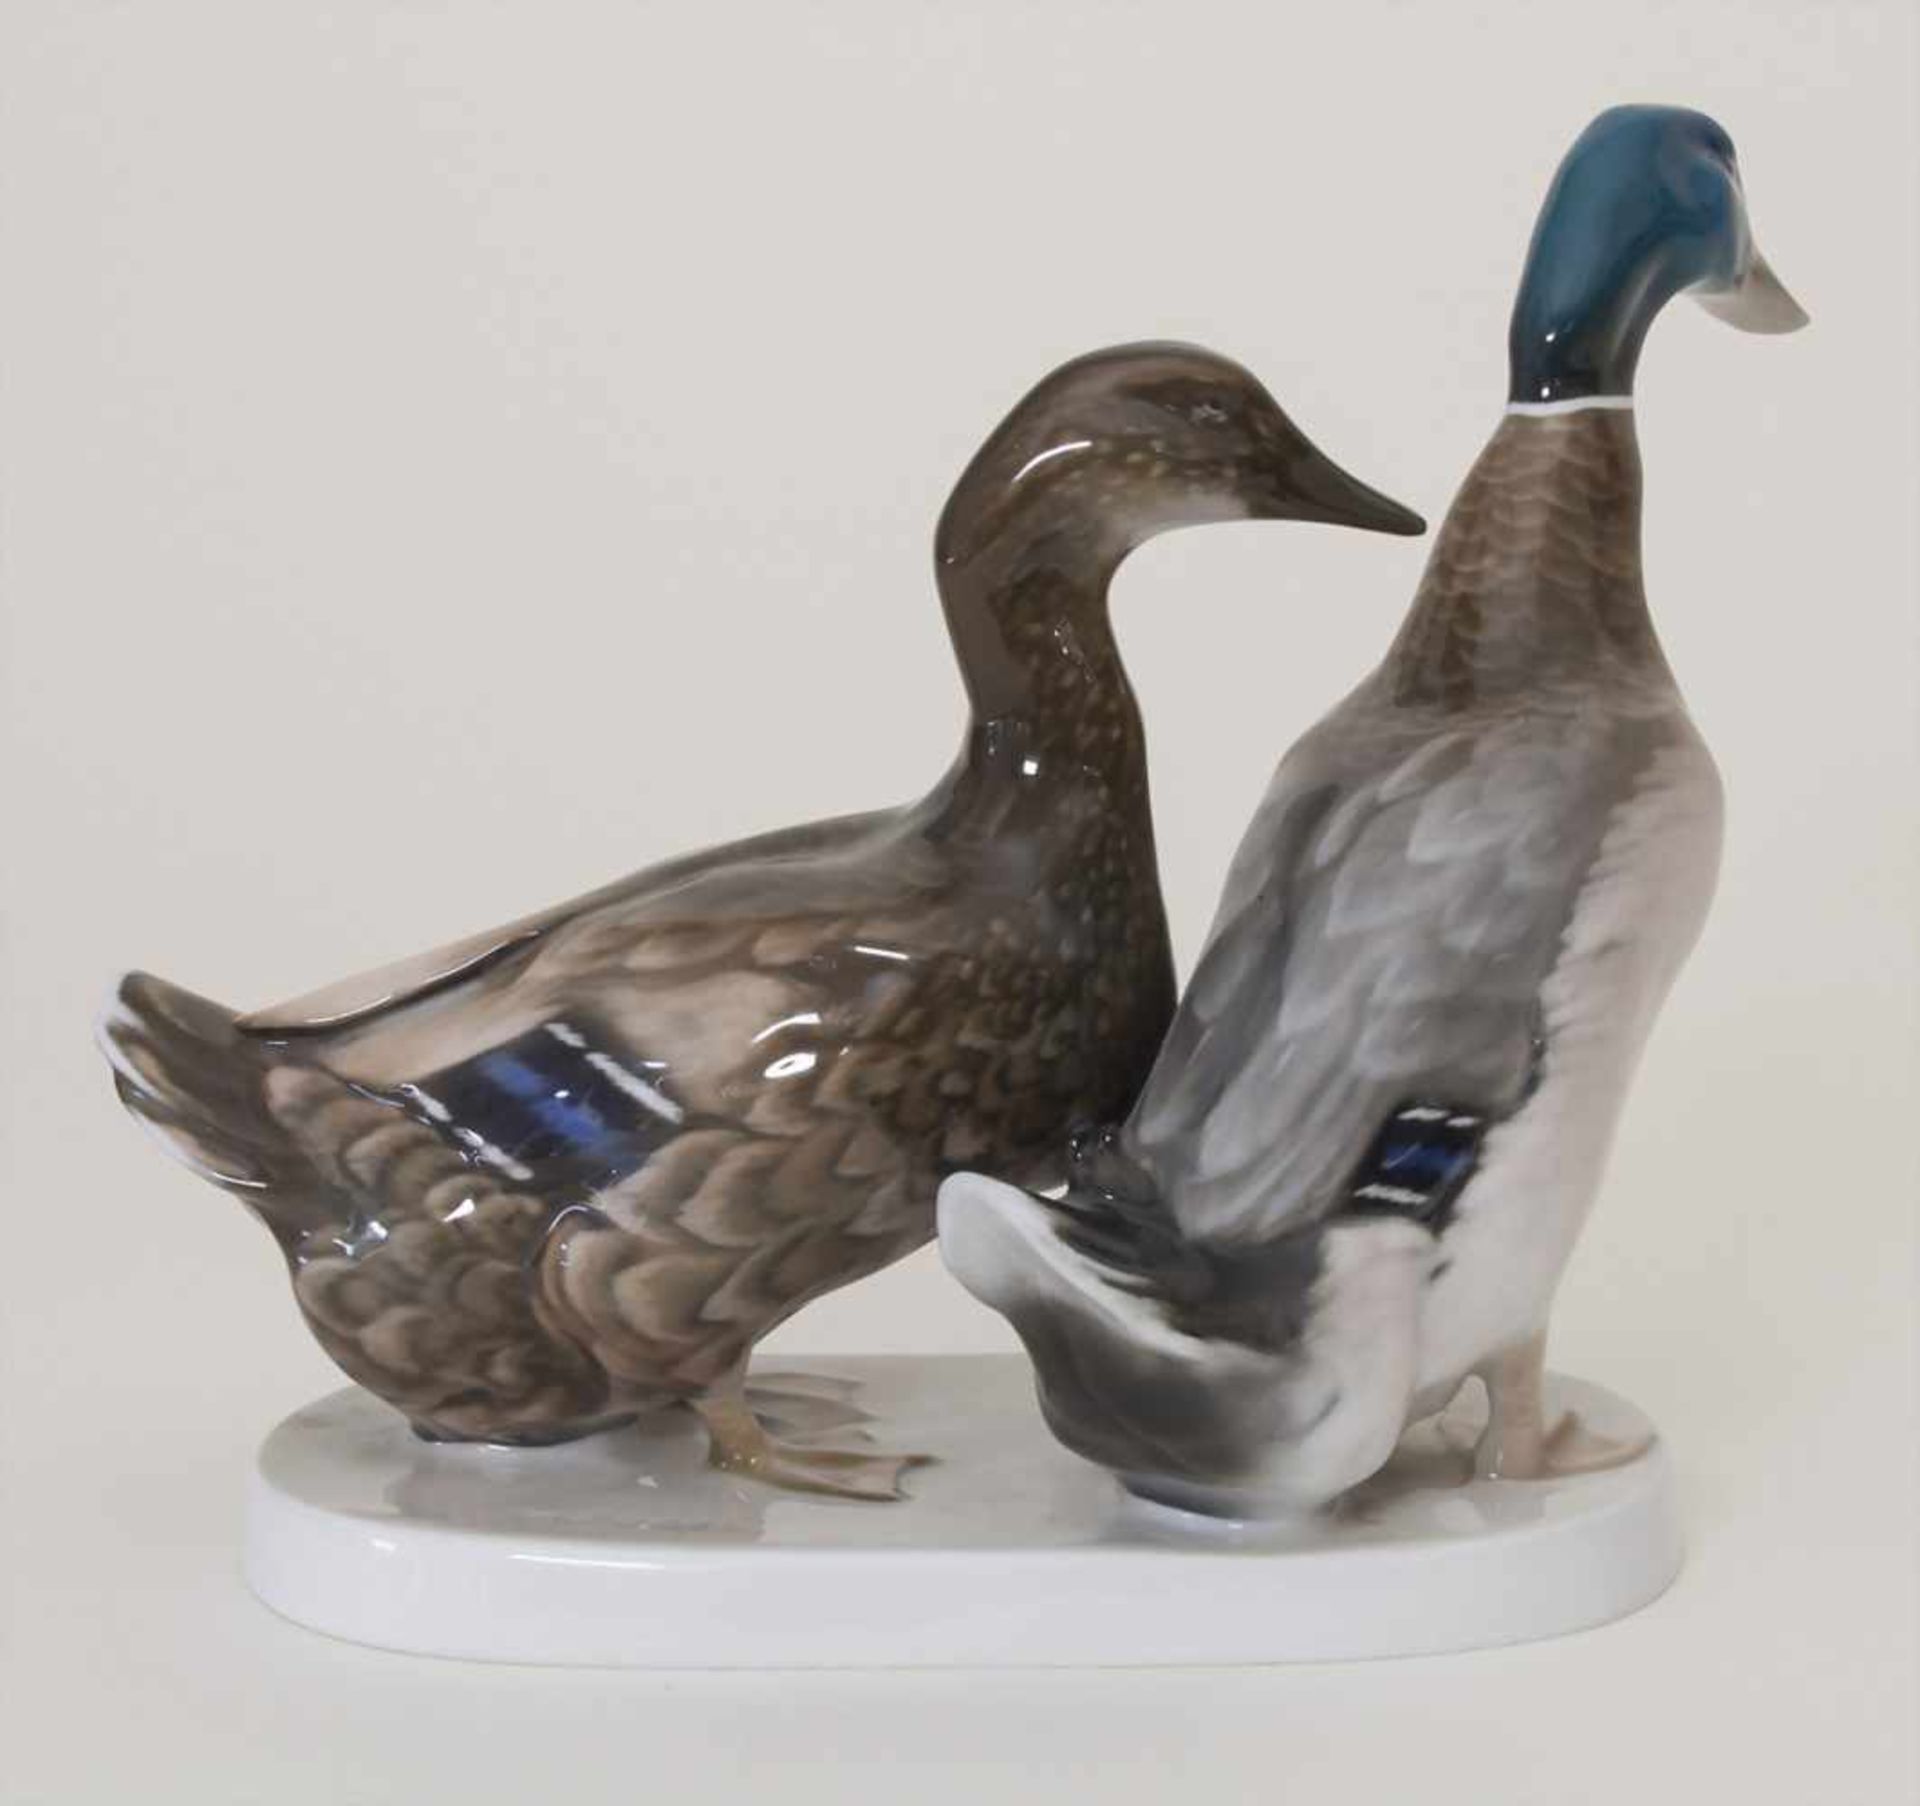 Tierfiguren 'Entenpaar' / A duck couple, Willy Zügel für Rosenthal, nach 1974Material: Porzellan, - Image 2 of 8